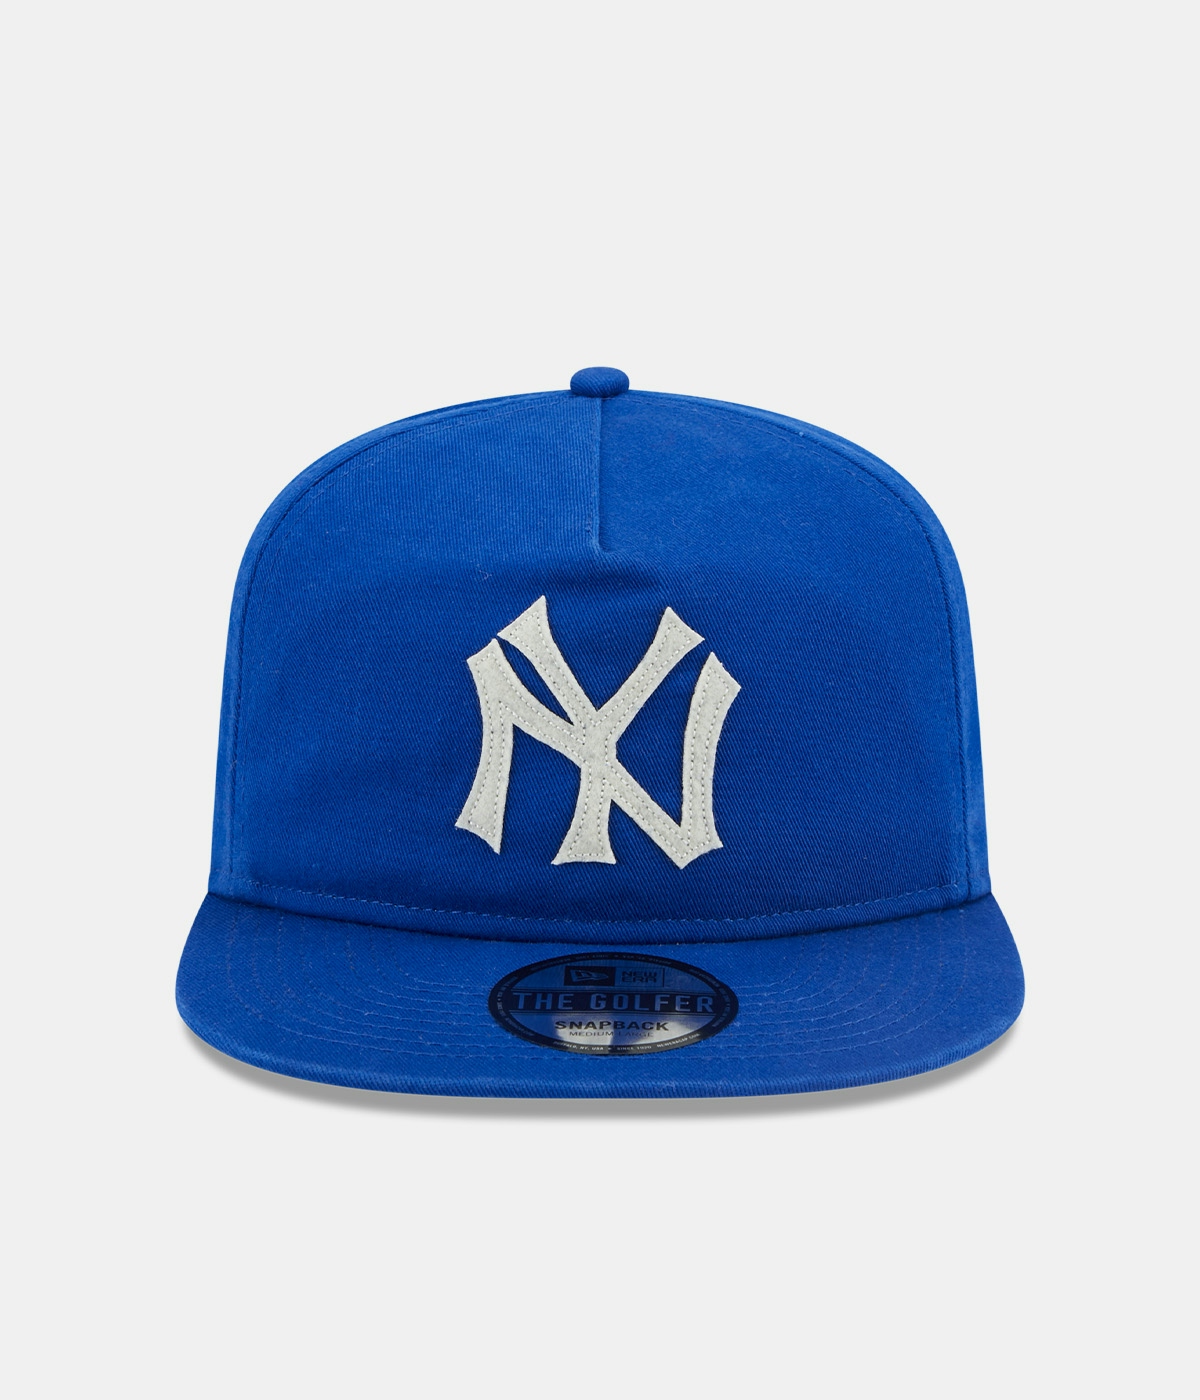 New Era Mlb World Series Golfer New York Yankees Cap Blue 5